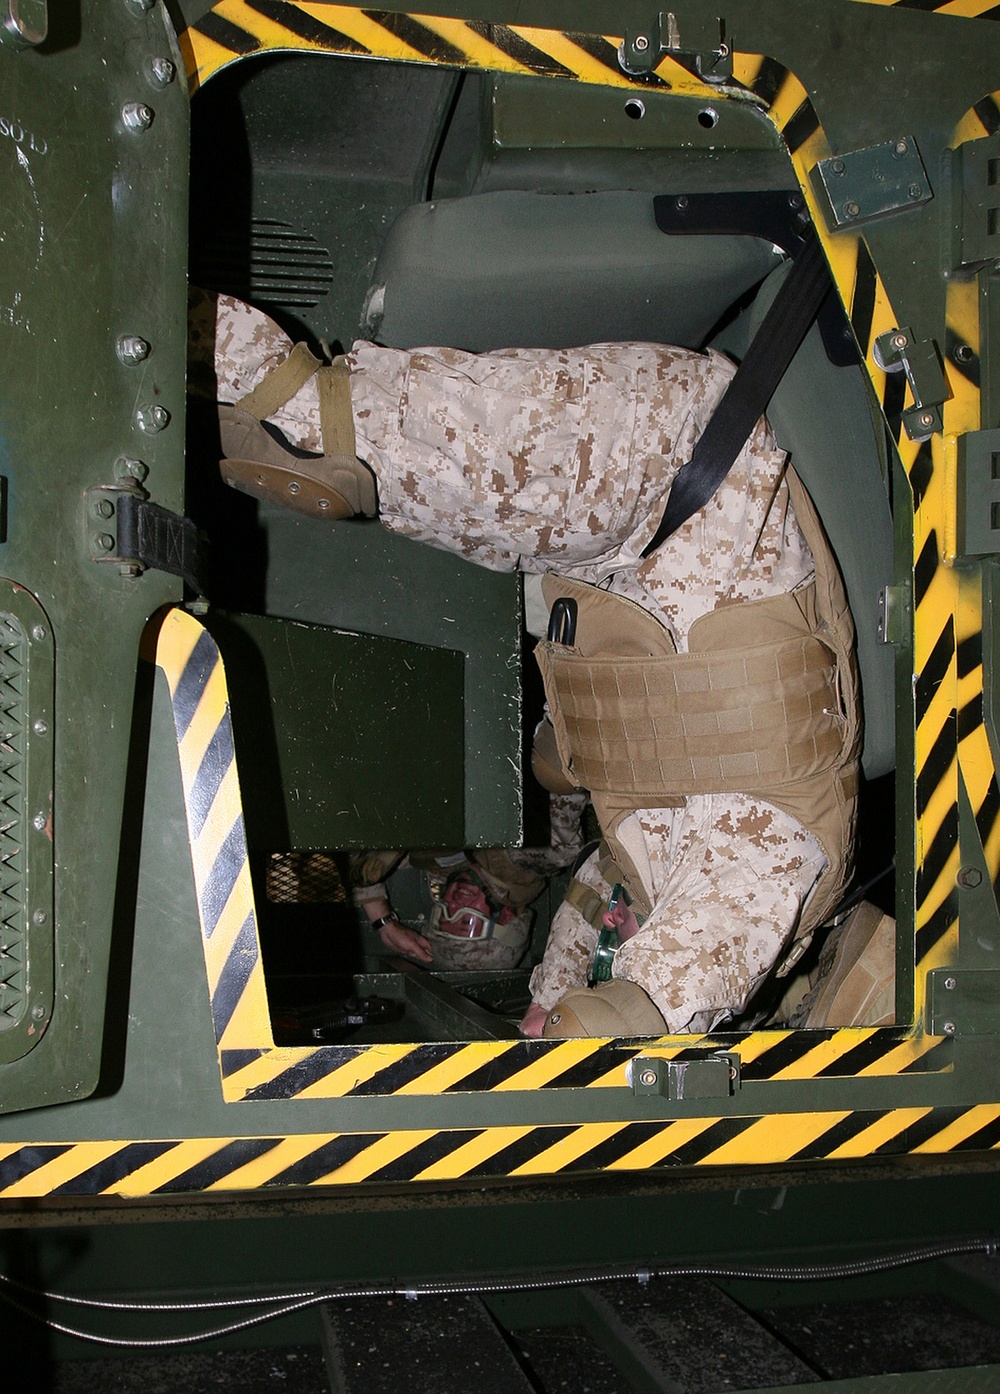 Iraq-bound Marines Feel the HEAT